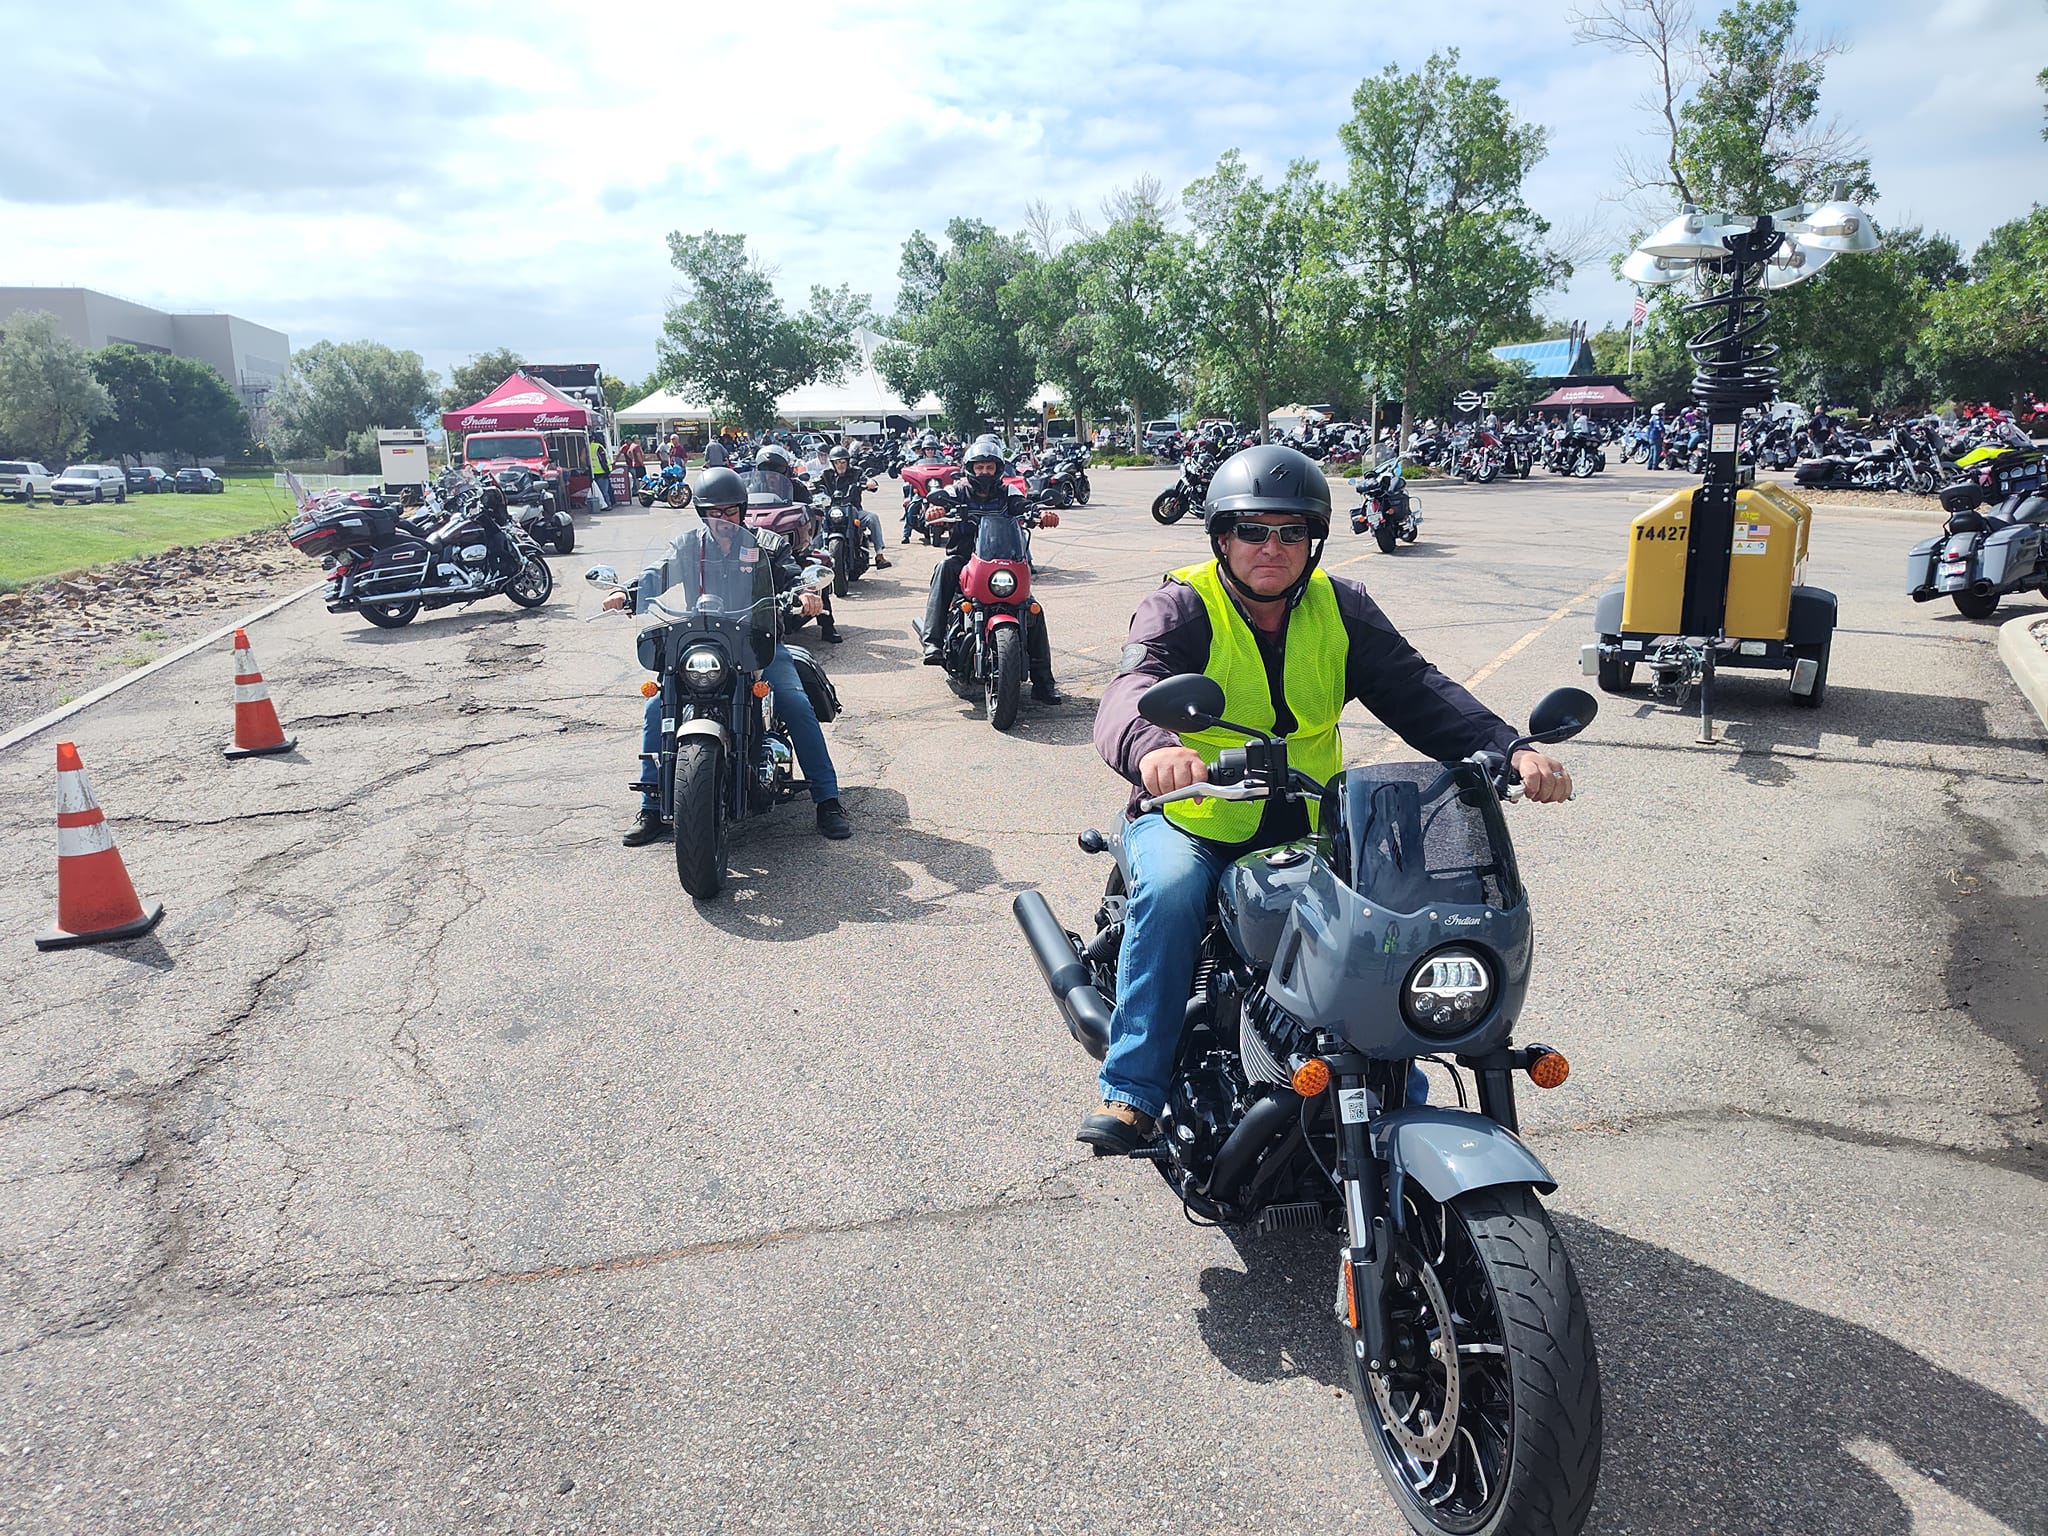 Northern Colorado IMRG conducting Indian Motorcycle demo rides at the Realities Rally 2023